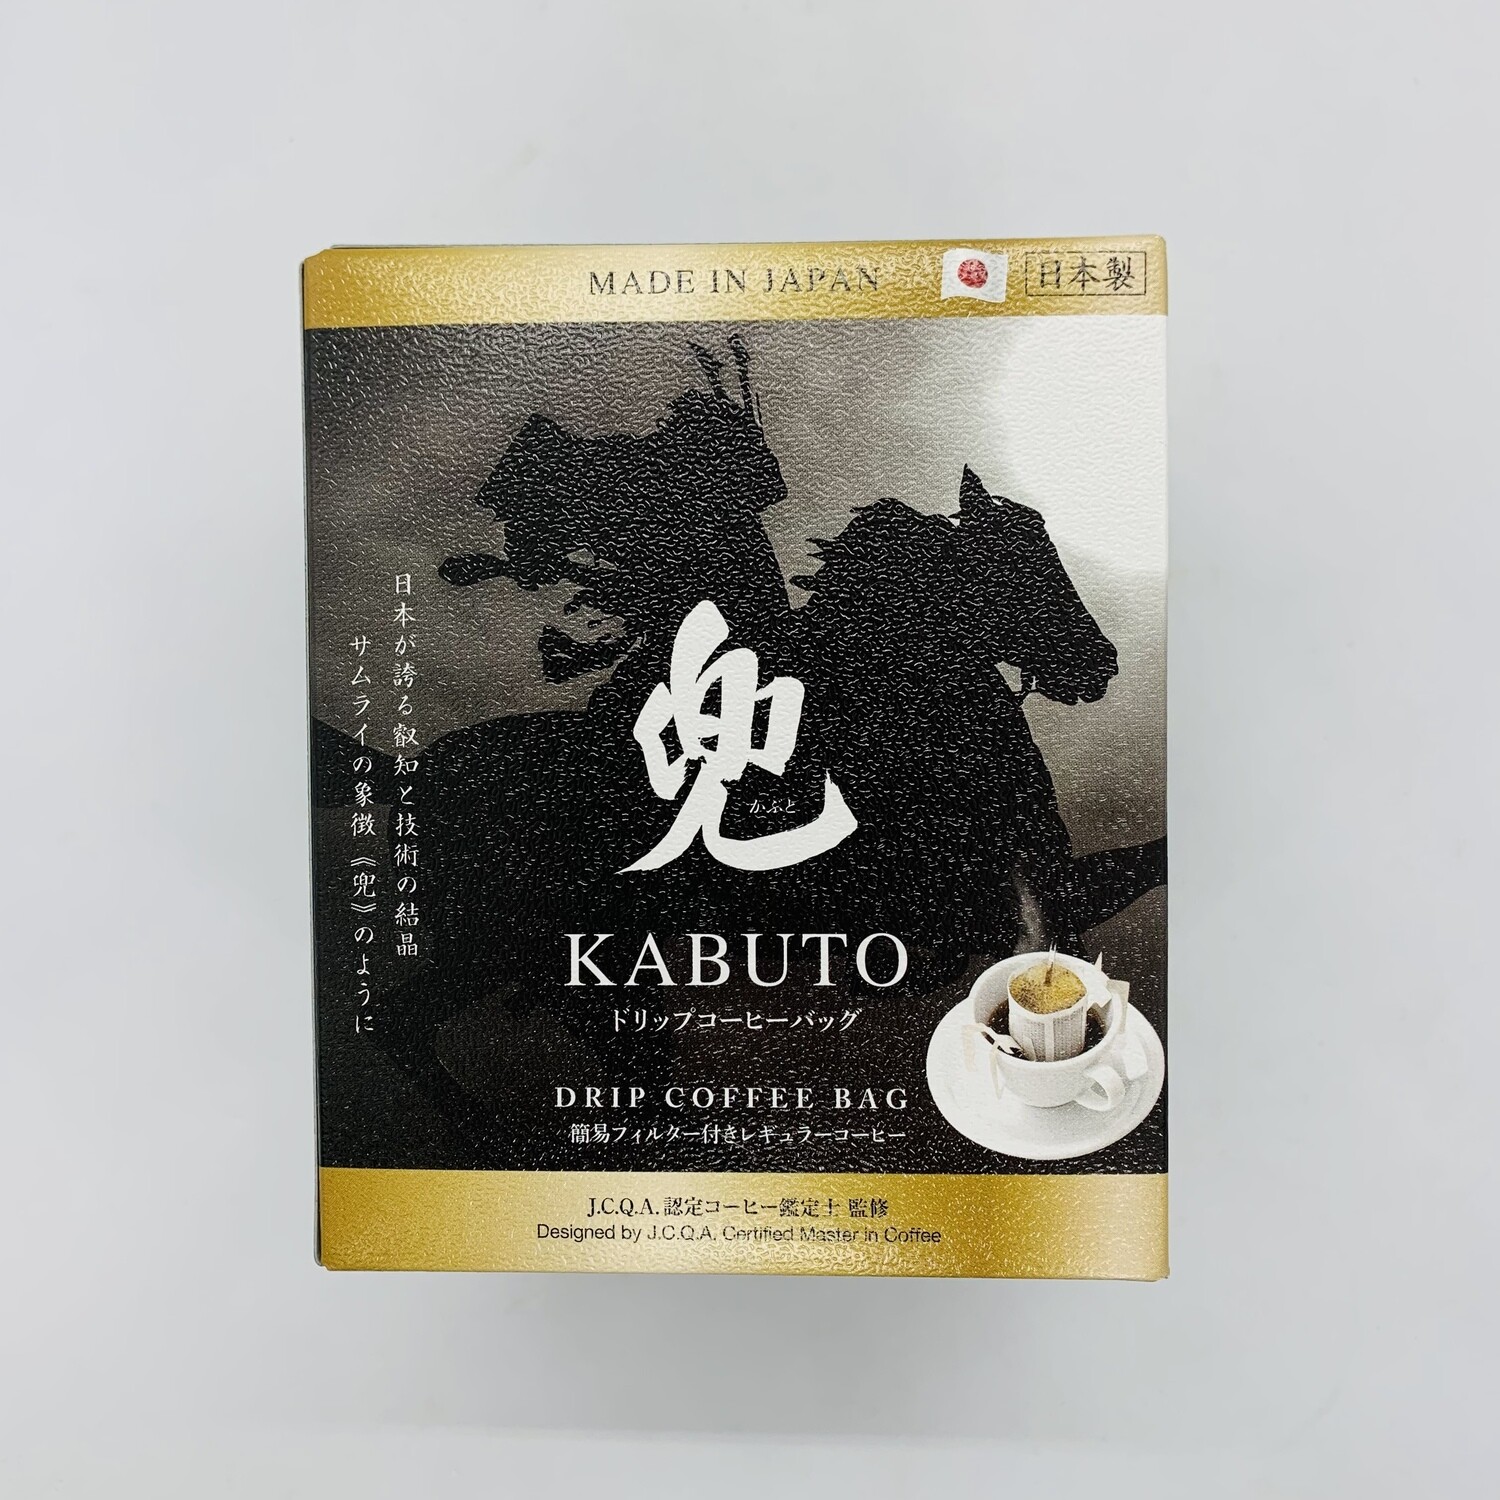 Kabuto Black Drip Coffee